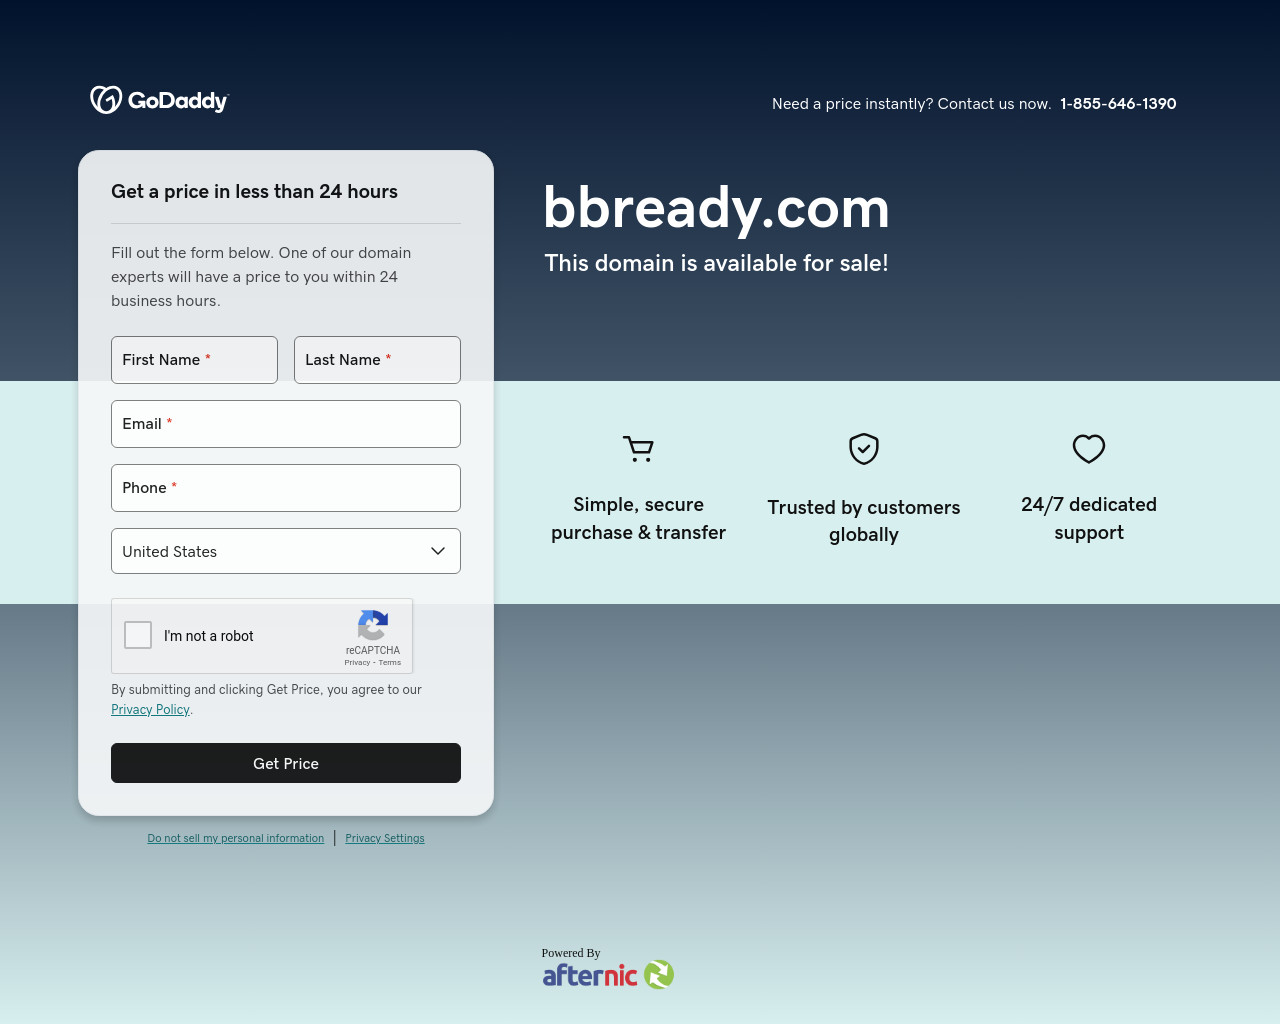 bbready.com